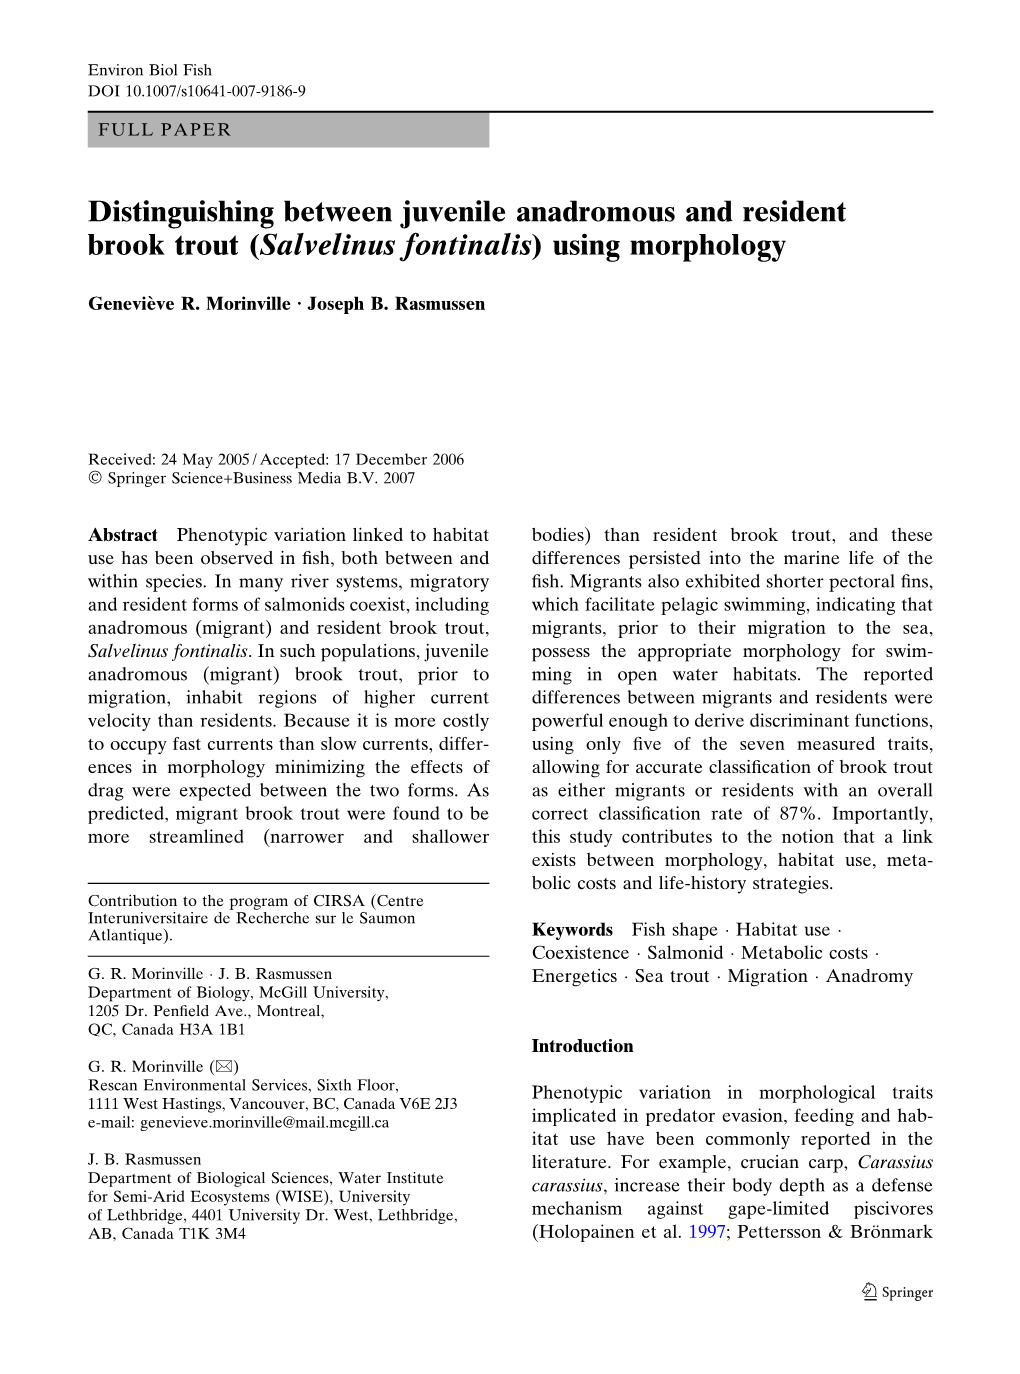 Distinguishing Between Juvenile Anadromous and Resident Brook Trout (Salvelinus Fontinalis) Using Morphology